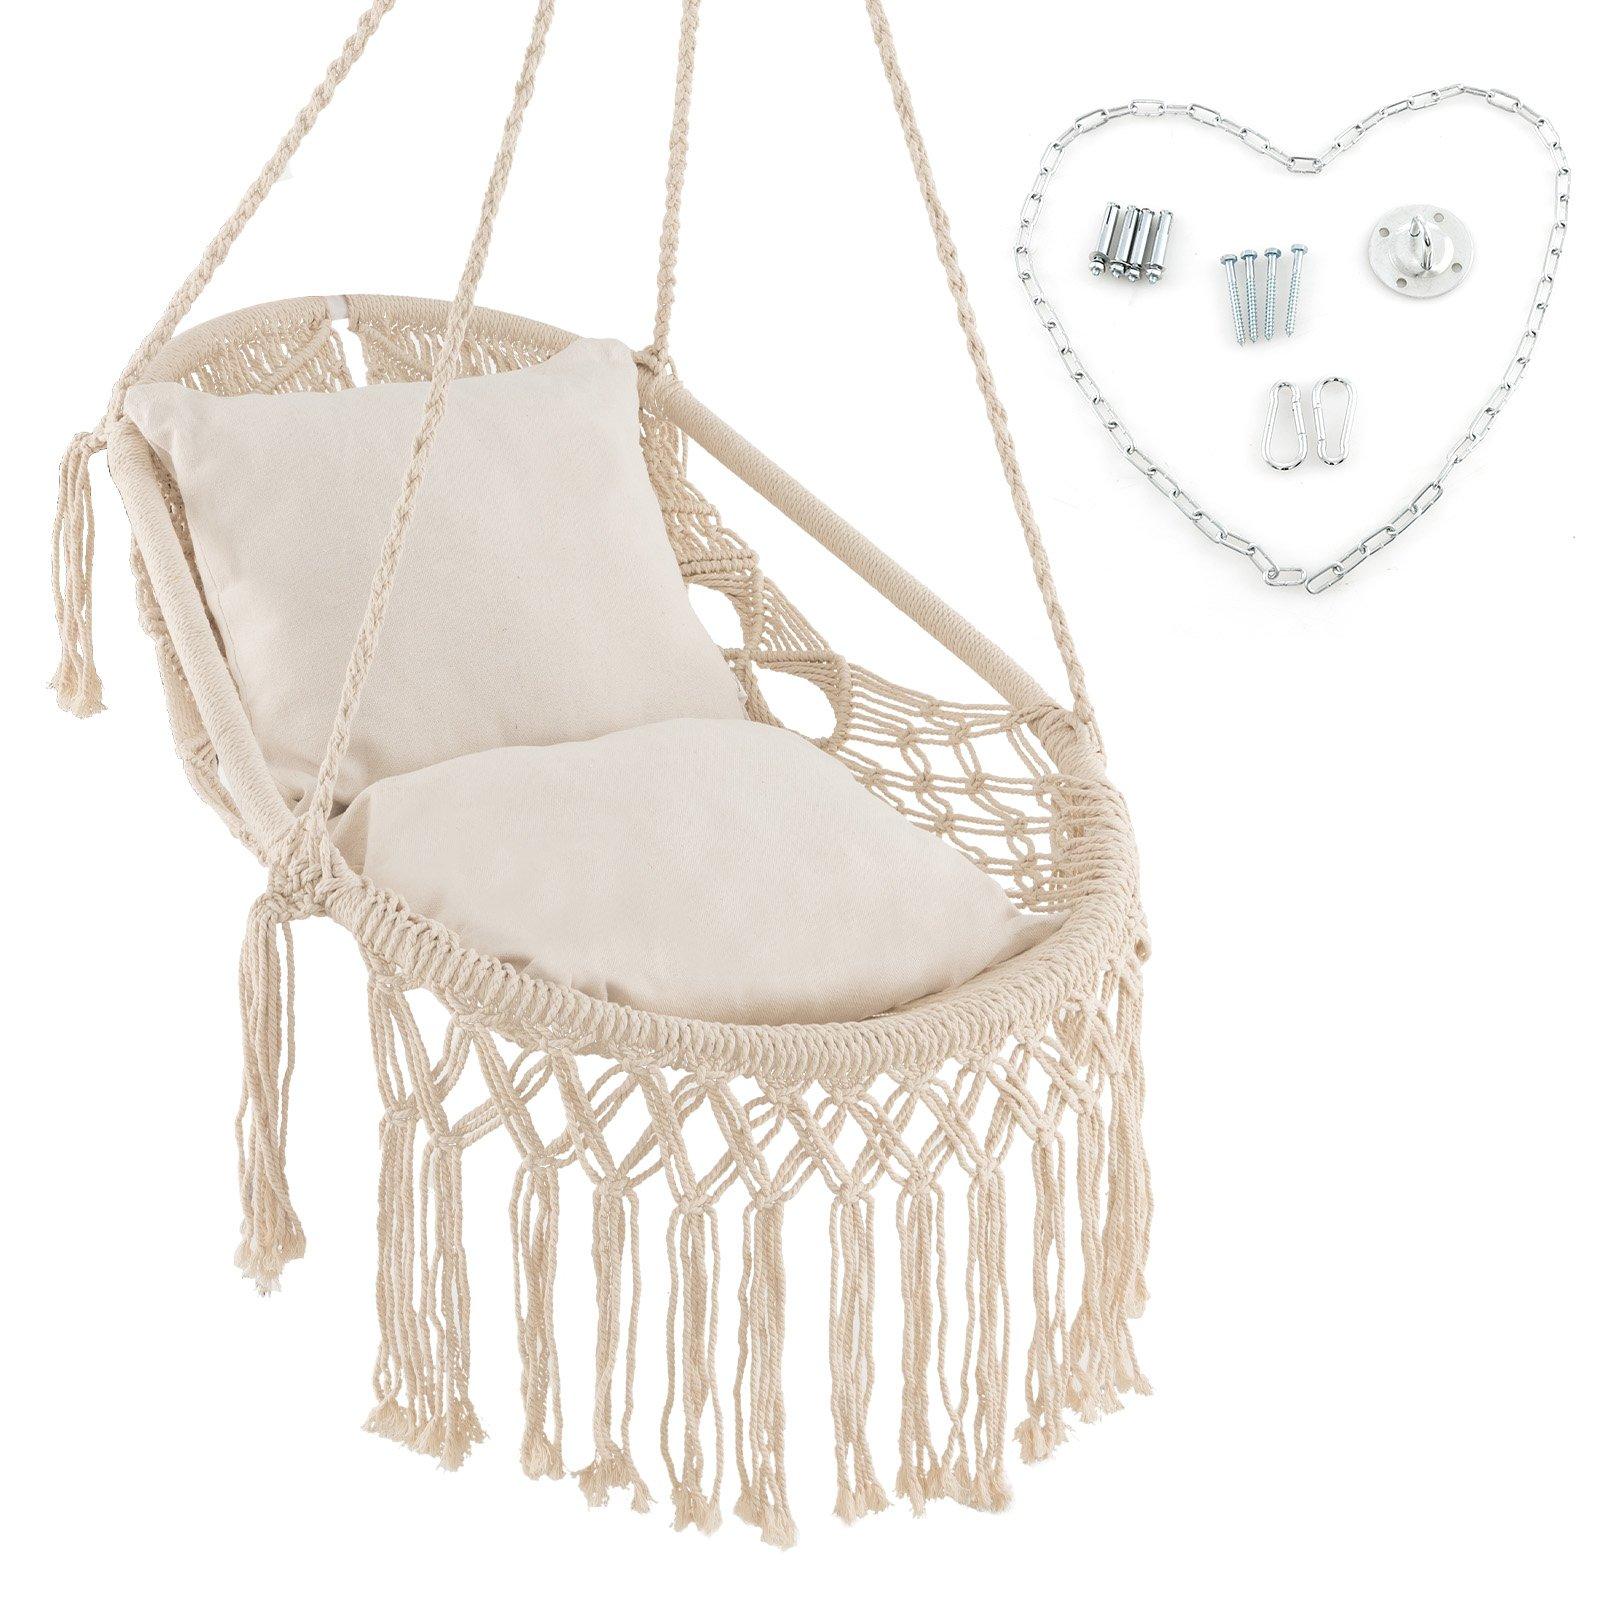 Macrame Swing Chair Hanging Seat Hammock Net Chair w/ Soft Seat Cushions